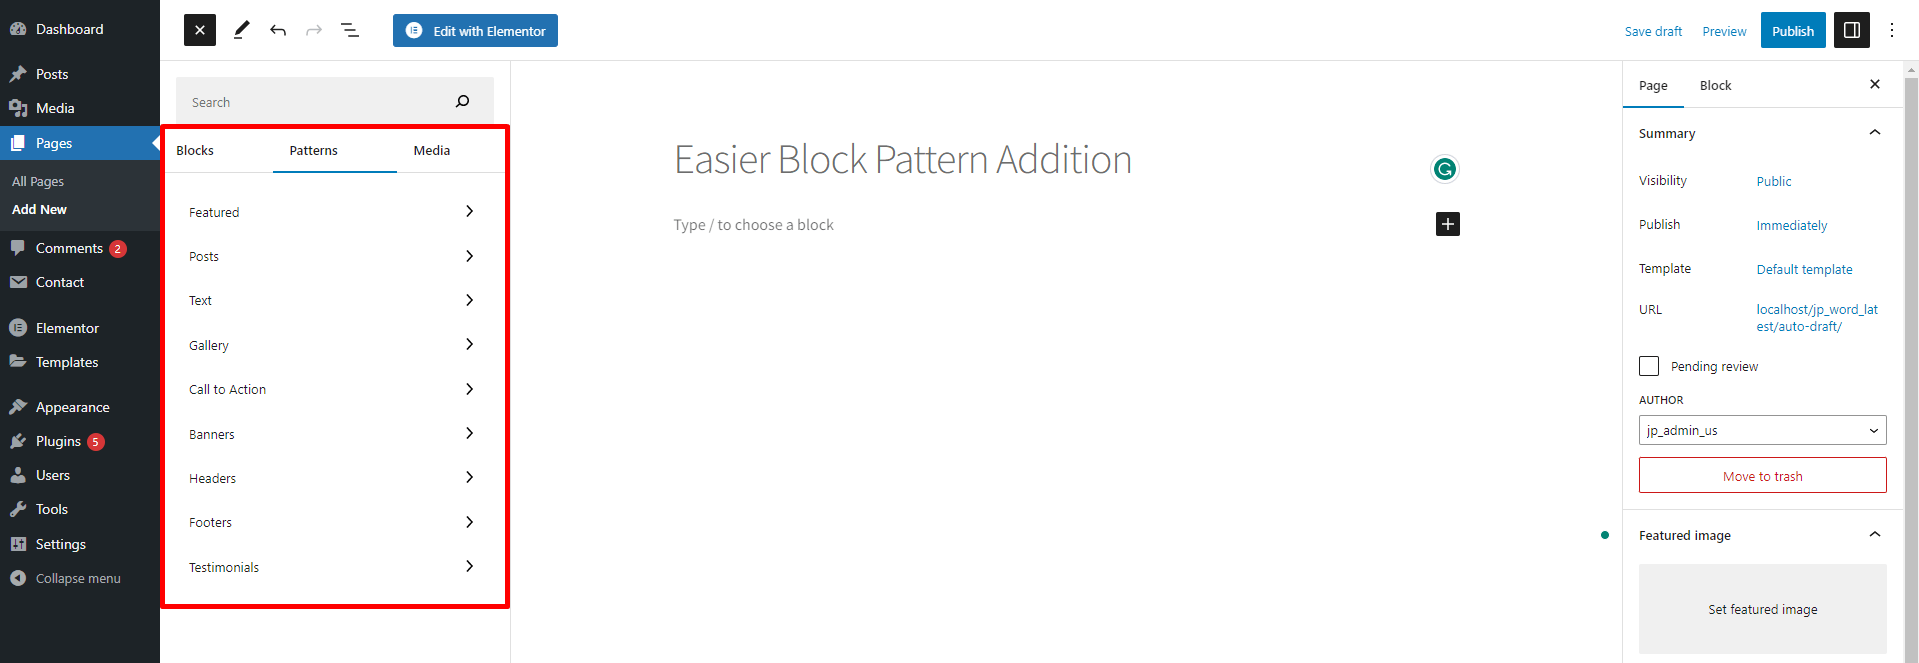 Easier Block Pattern Addition